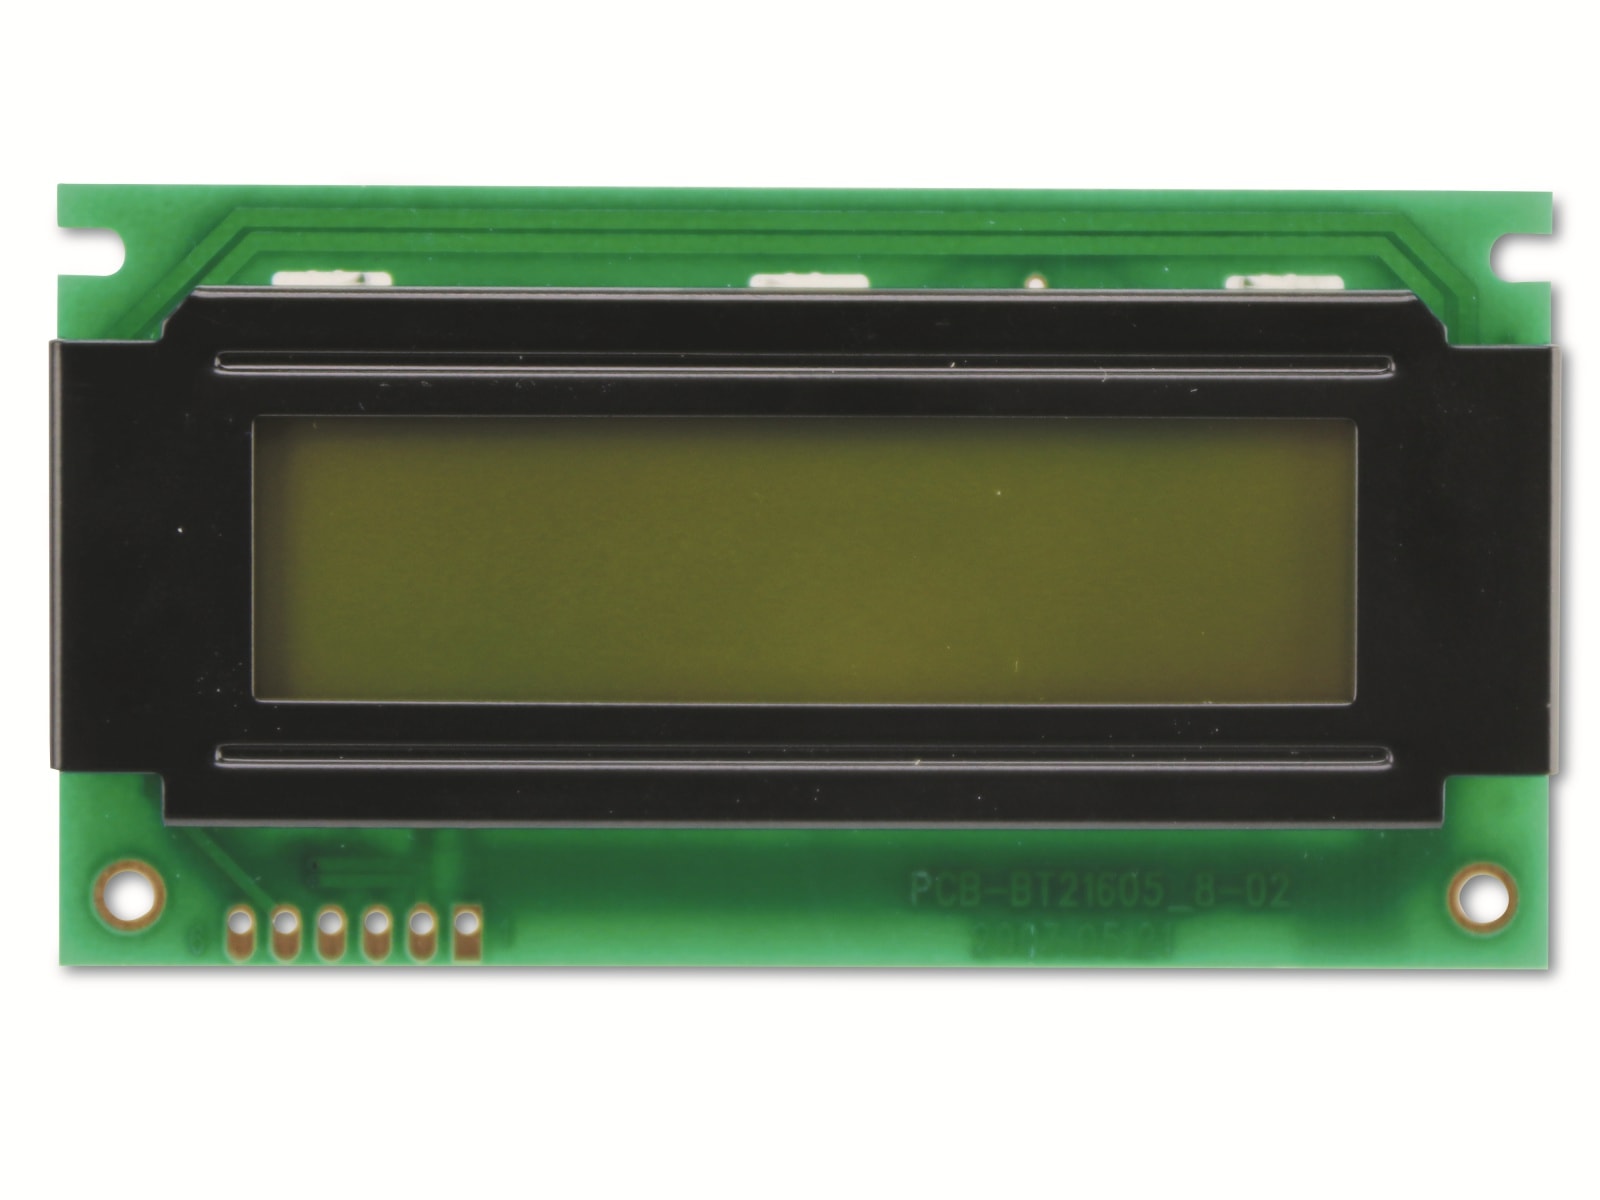 LCD BATRON BTHQ21605AV-03, 16x2, I²C, 5V, LED-Hintergrundbeleuchtung